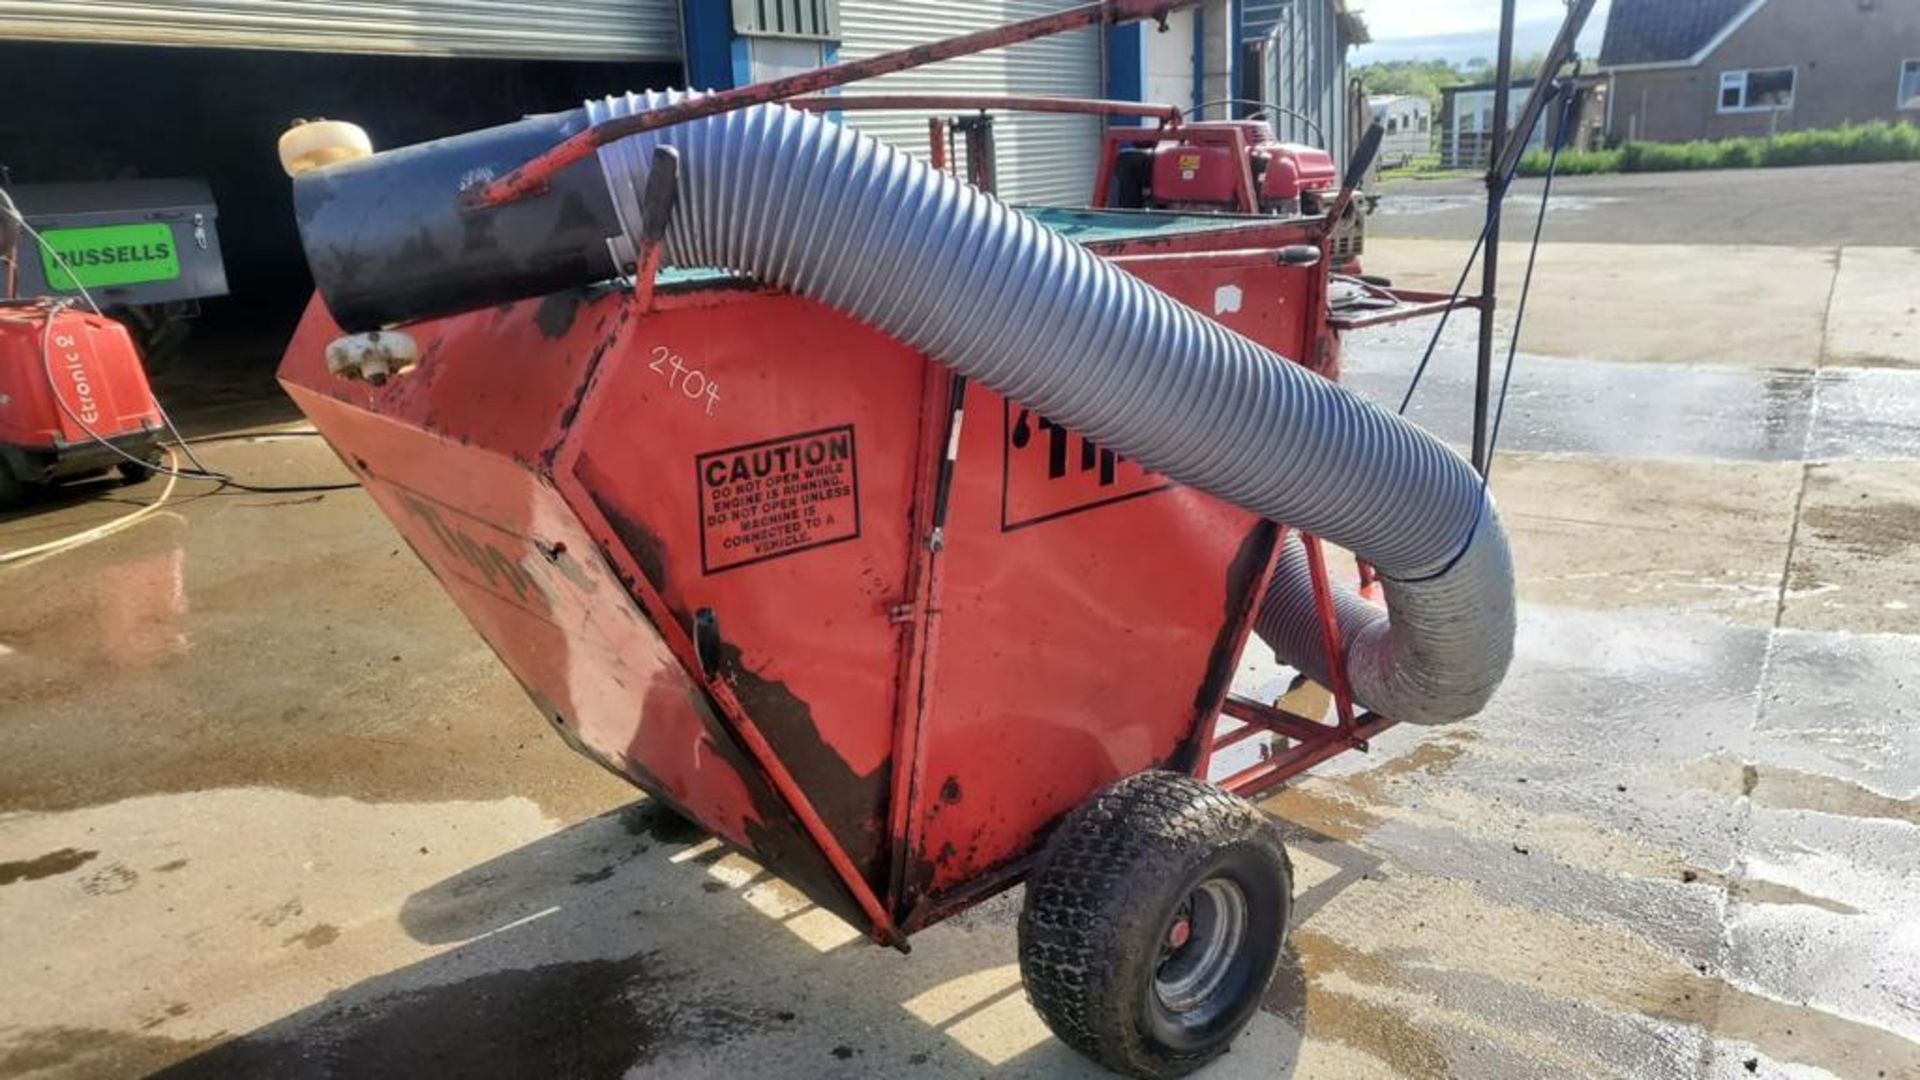 Tippa paddock cleaner & horse manure vacuum - Image 4 of 6